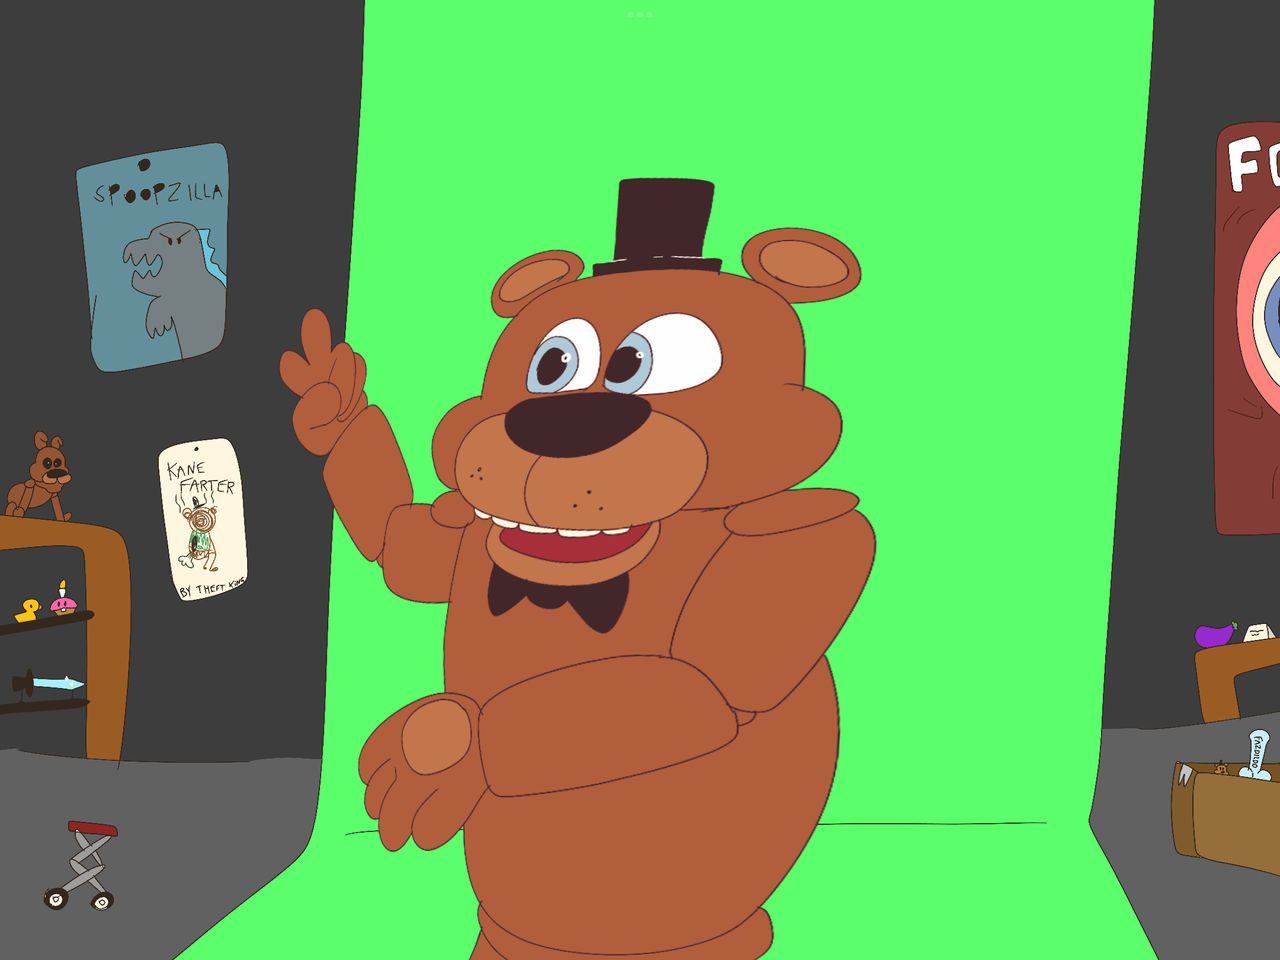 Five funky nights at Freddy's 2 [full animation] by Jupiterjumper2 on  DeviantArt